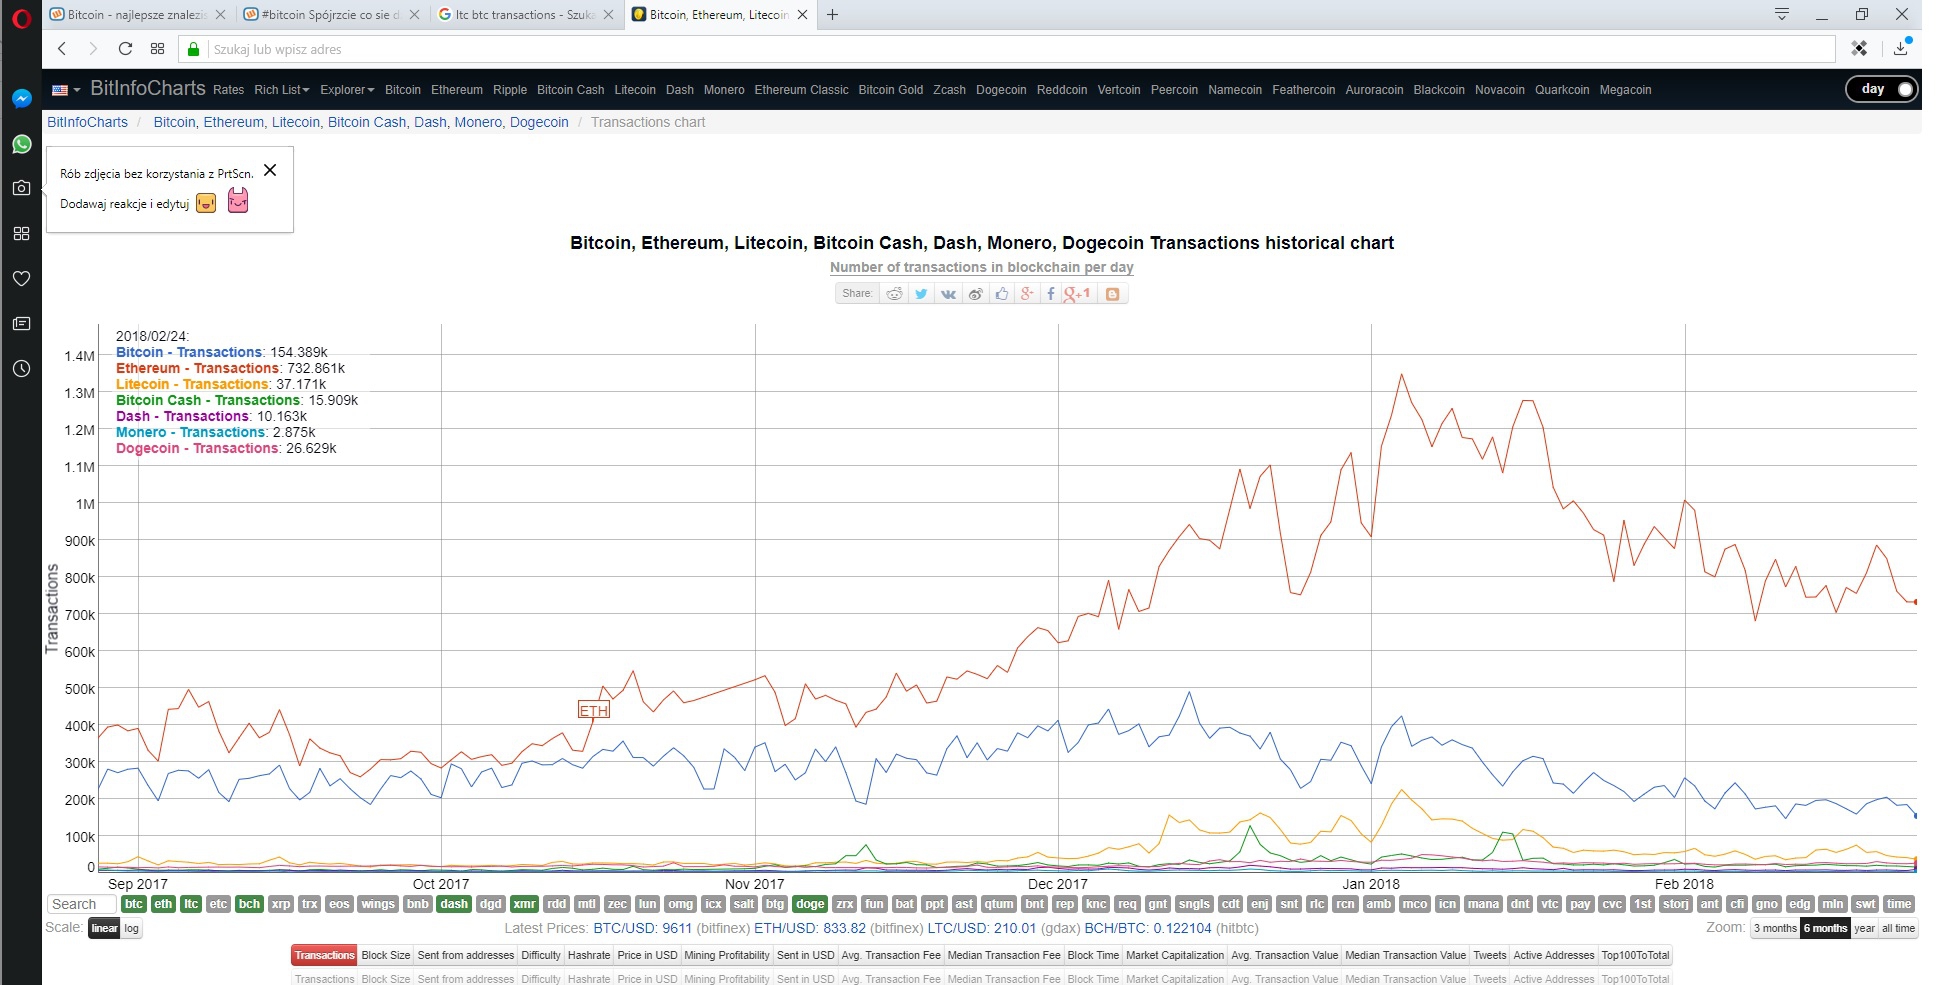 Btc transaction real time hunter douglas investing businessweek insight